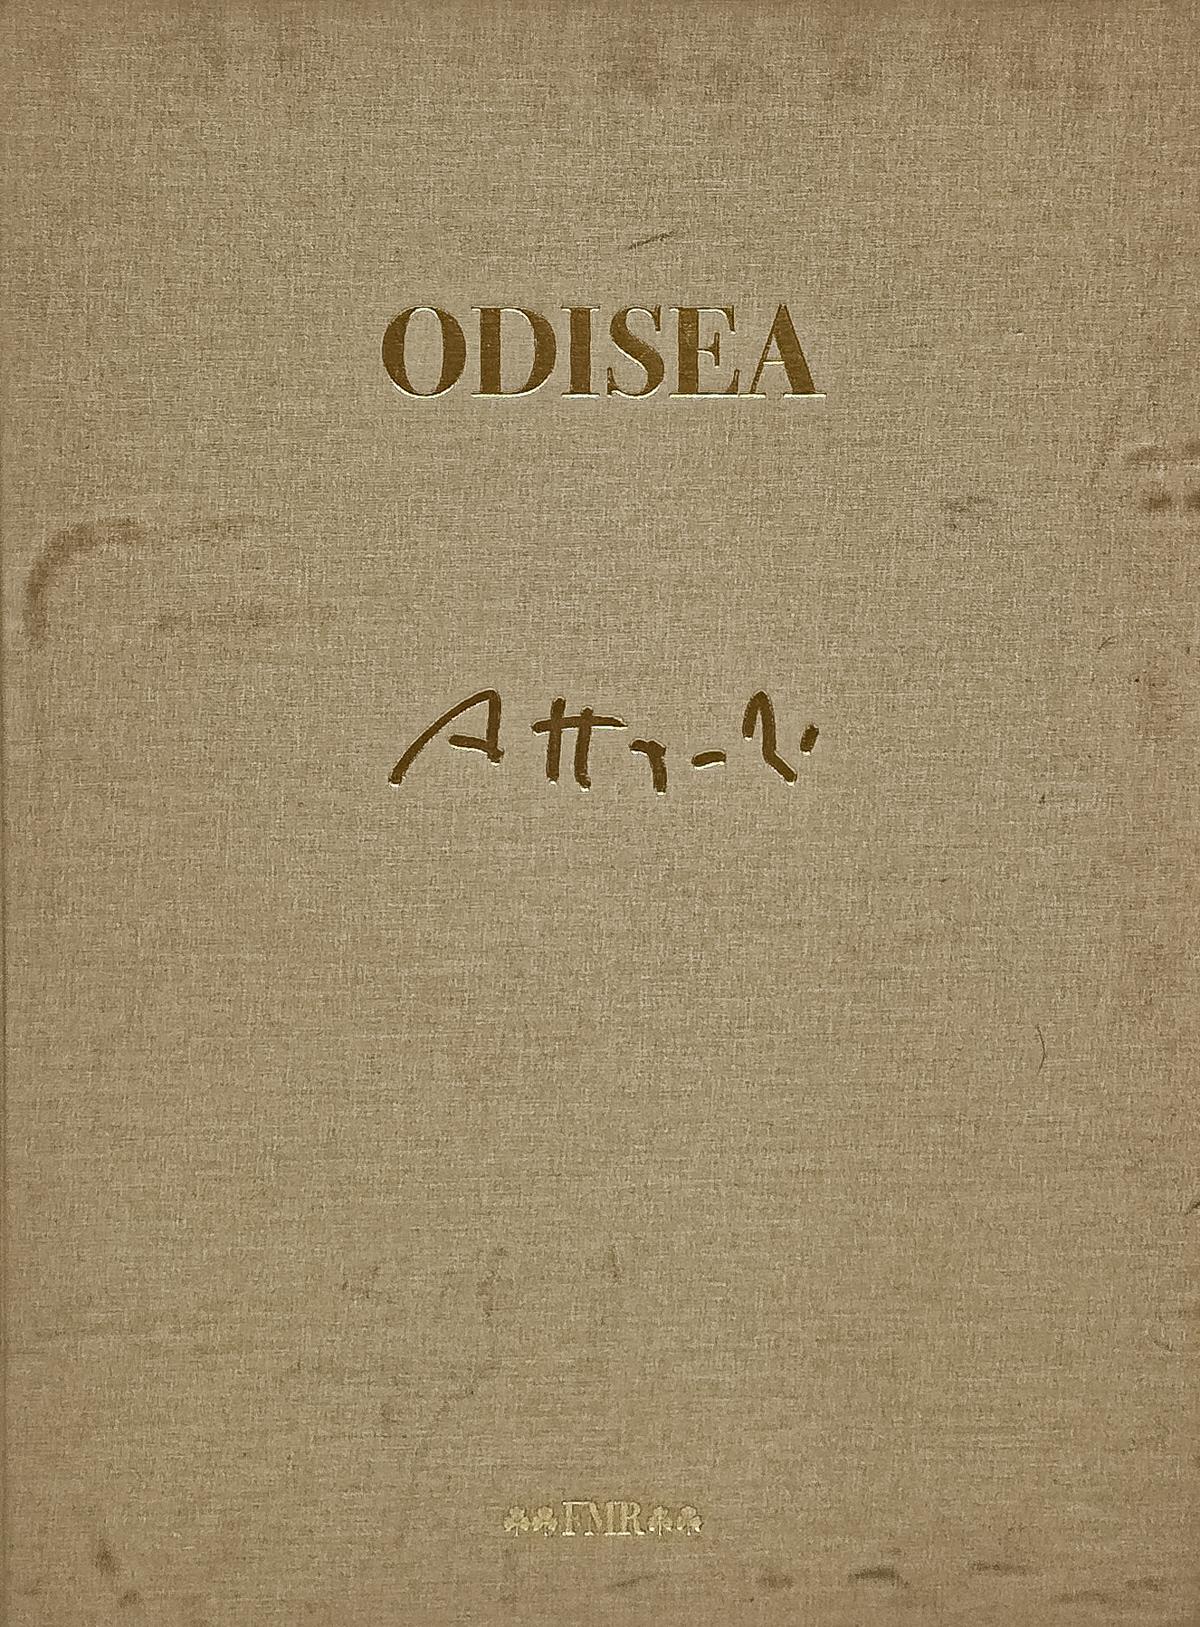 "ODISEA"